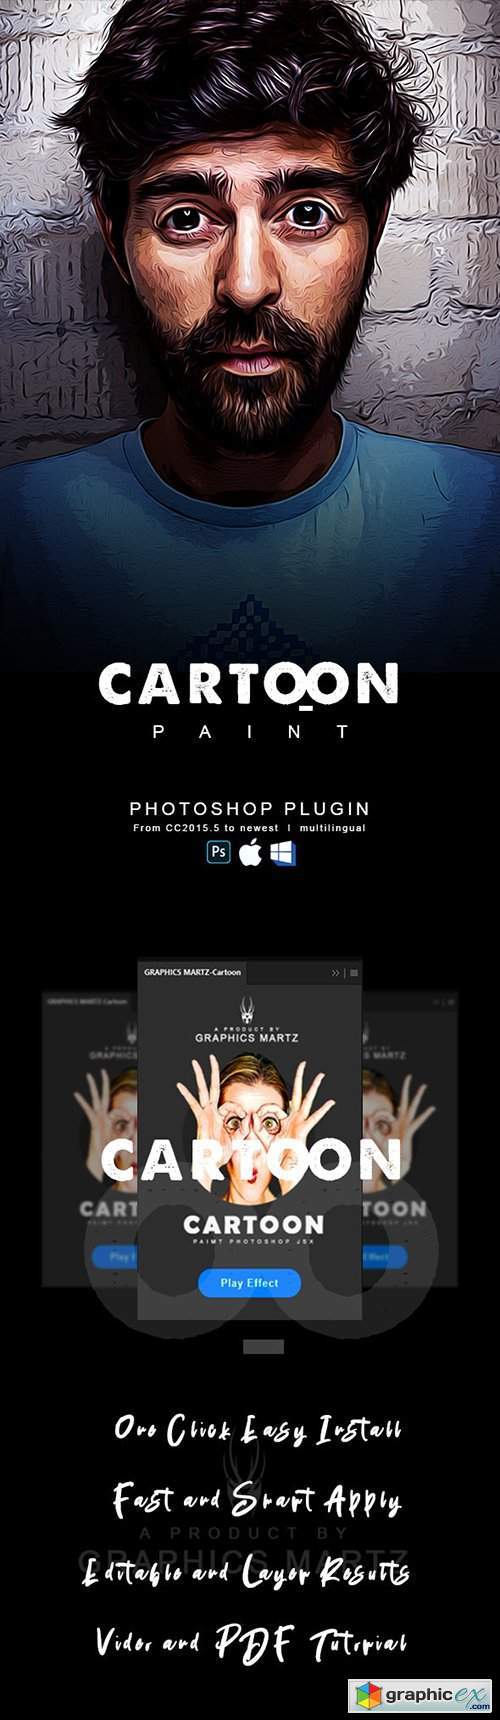 Cartoon Paint Photoshop Plugin